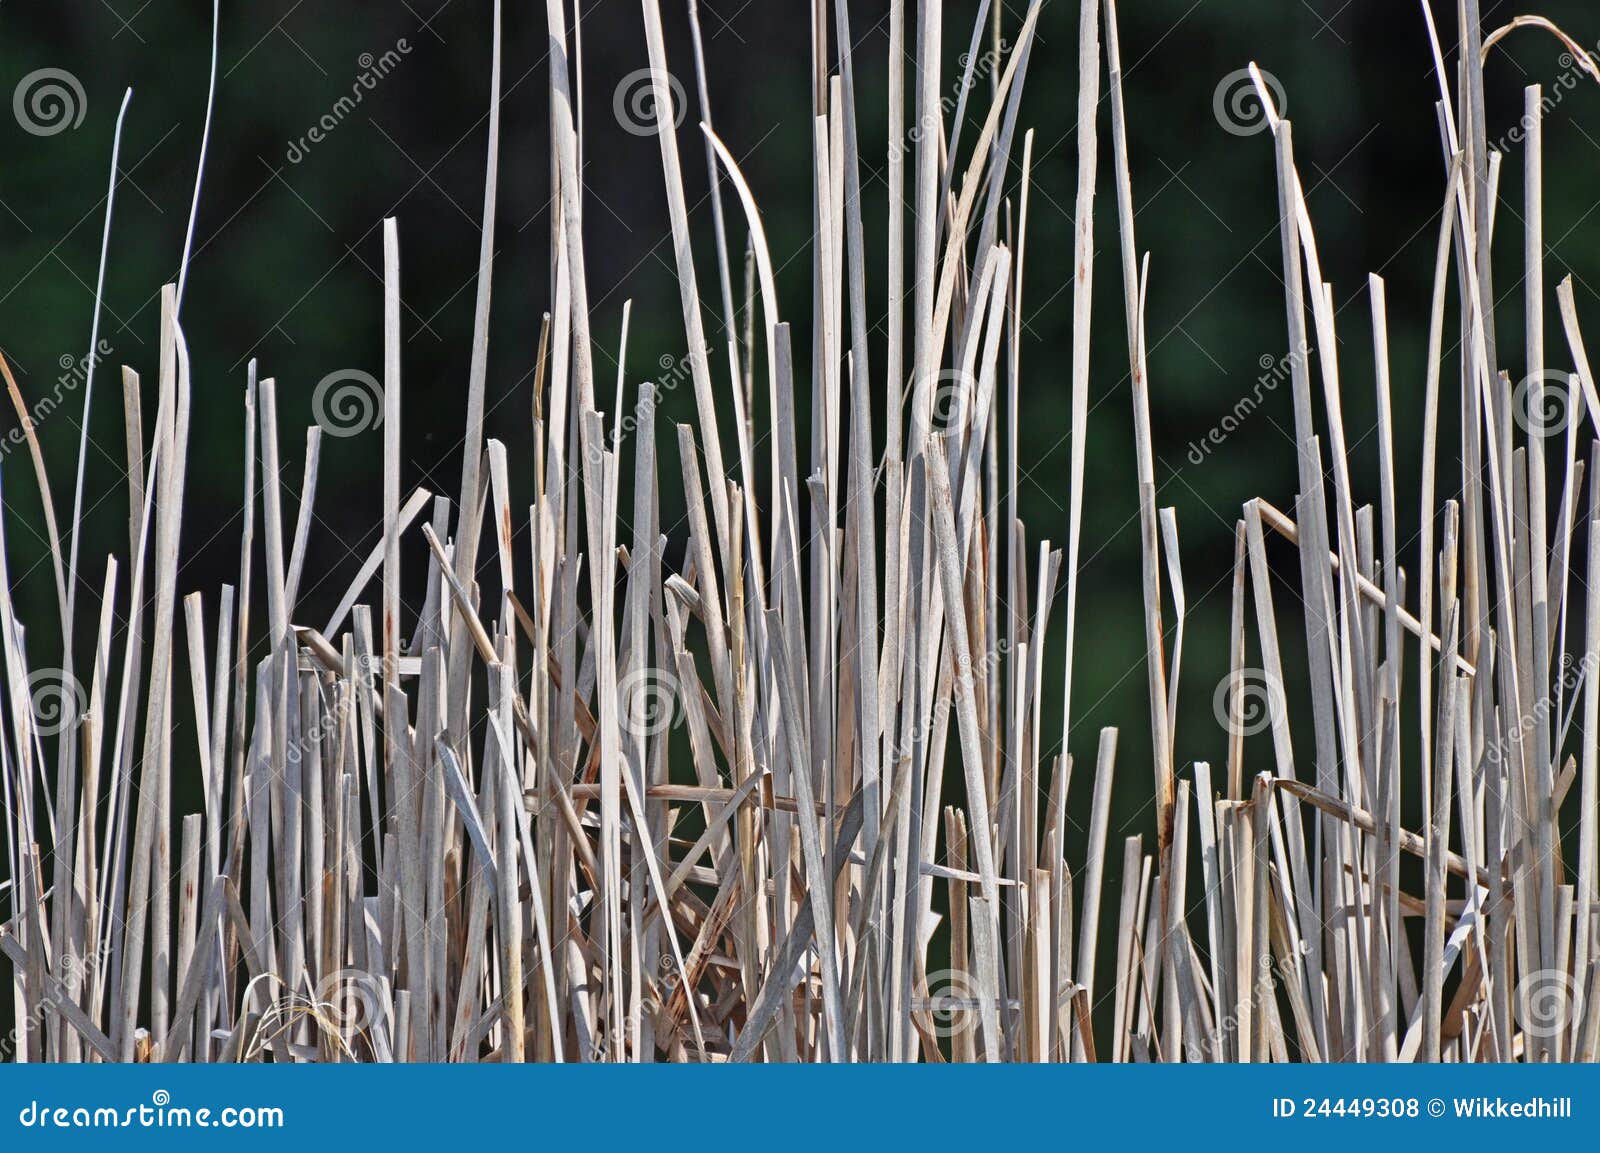 marsh reeds